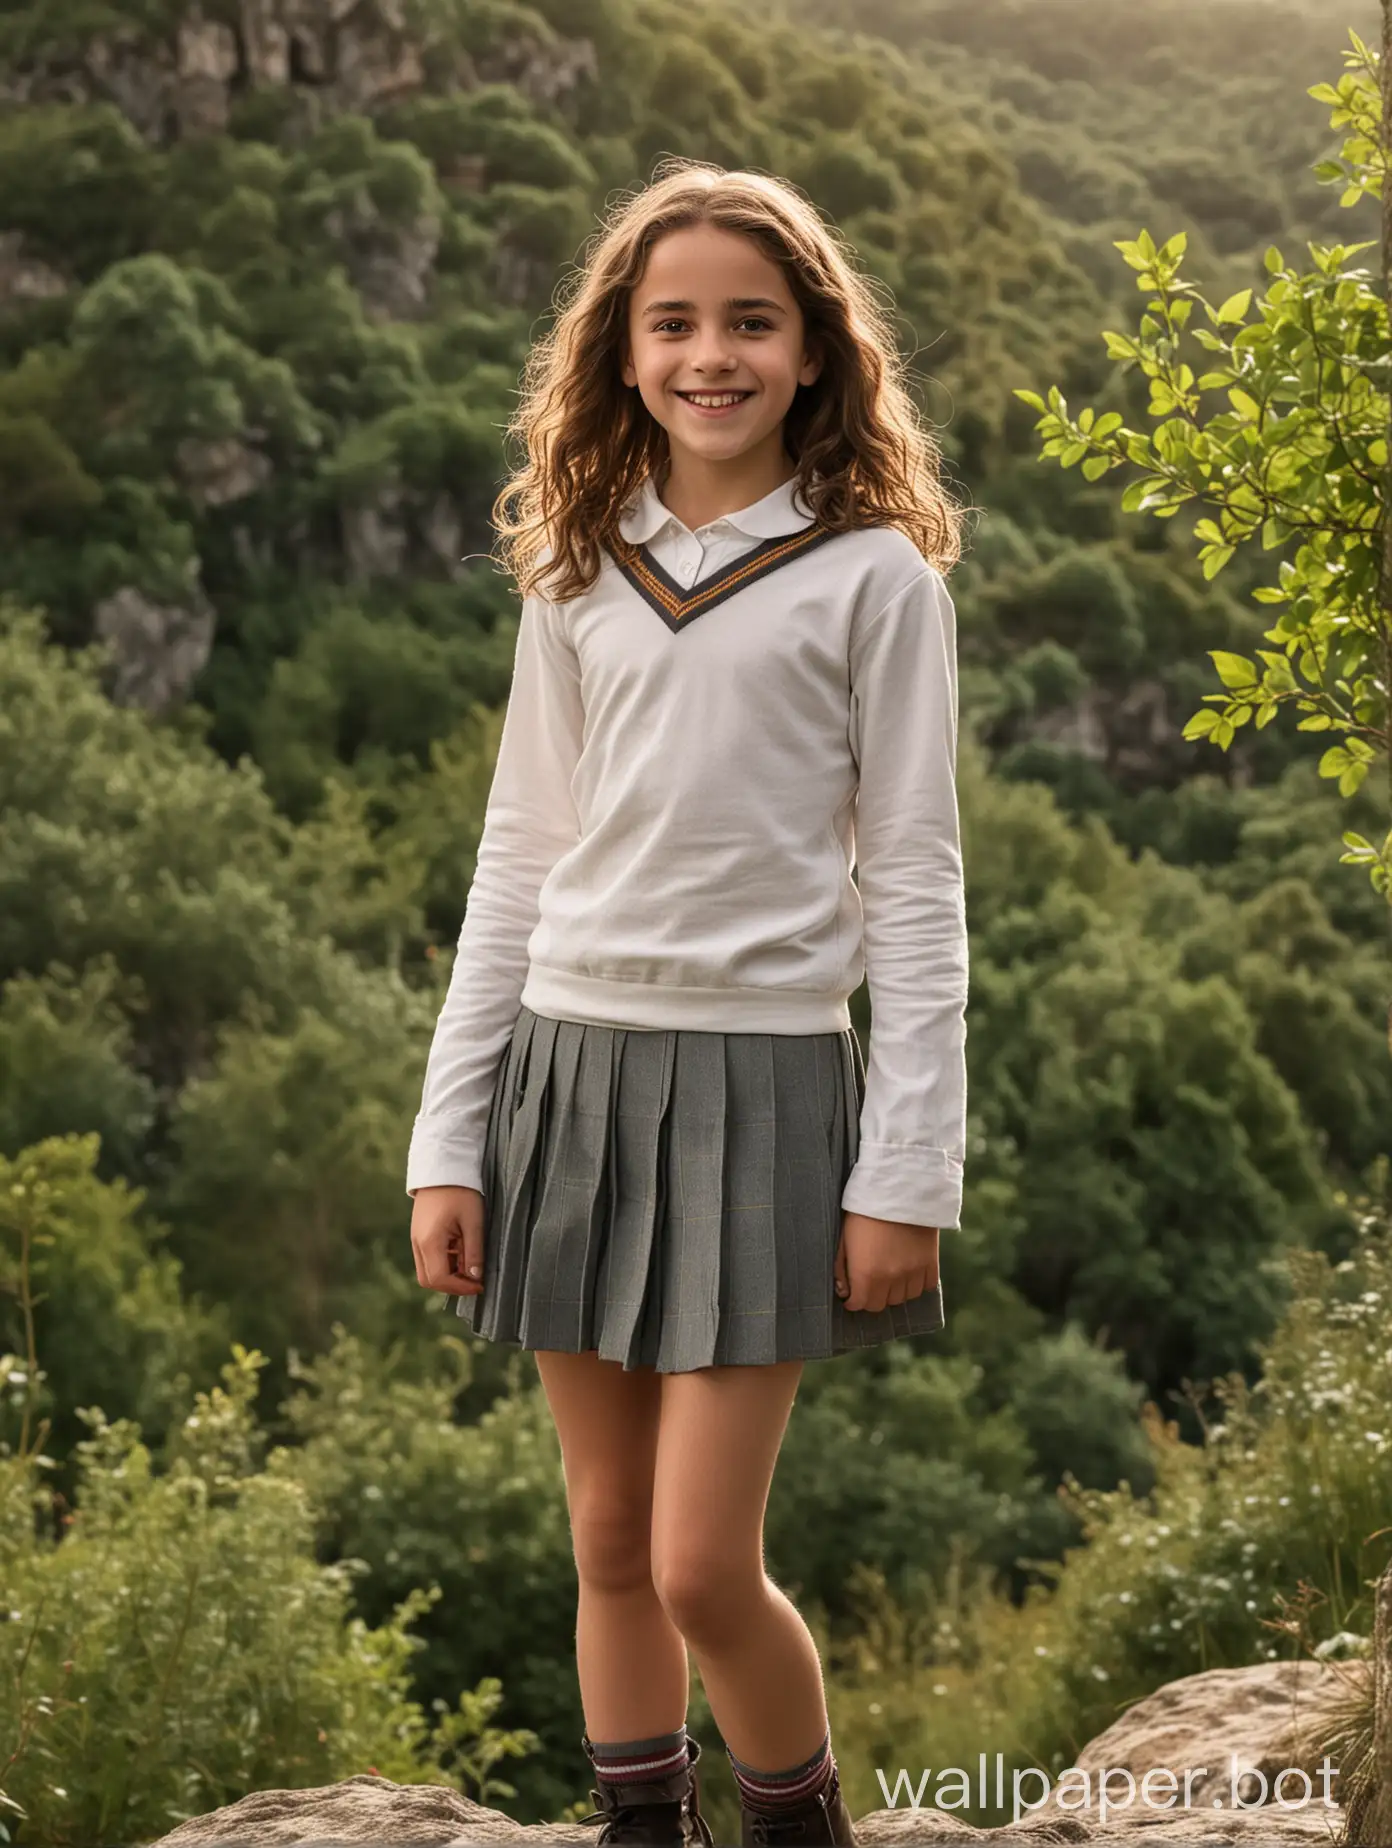 eleven-year-old girl, full height, Hermione Granger, against a nature backdrop, light clothing, short skirt, smile